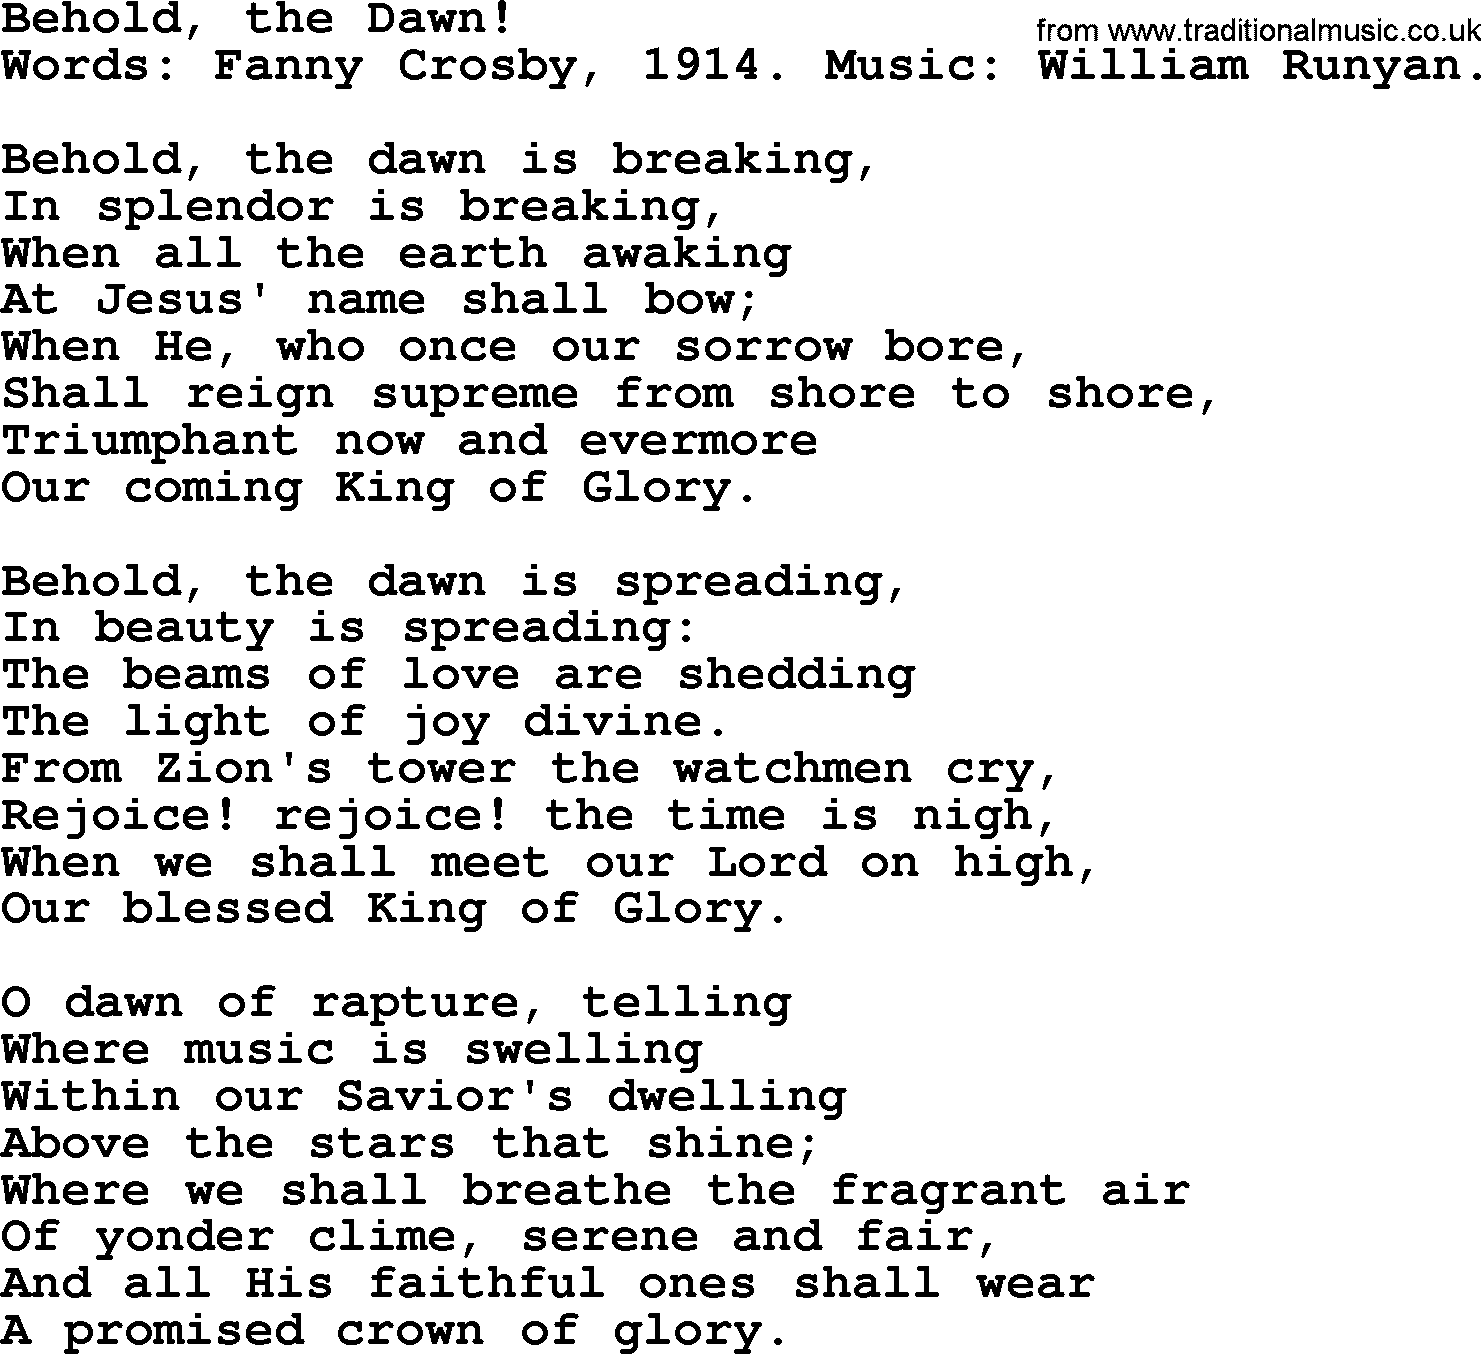 Fanny Crosby song: Behold, The Dawn!, lyrics